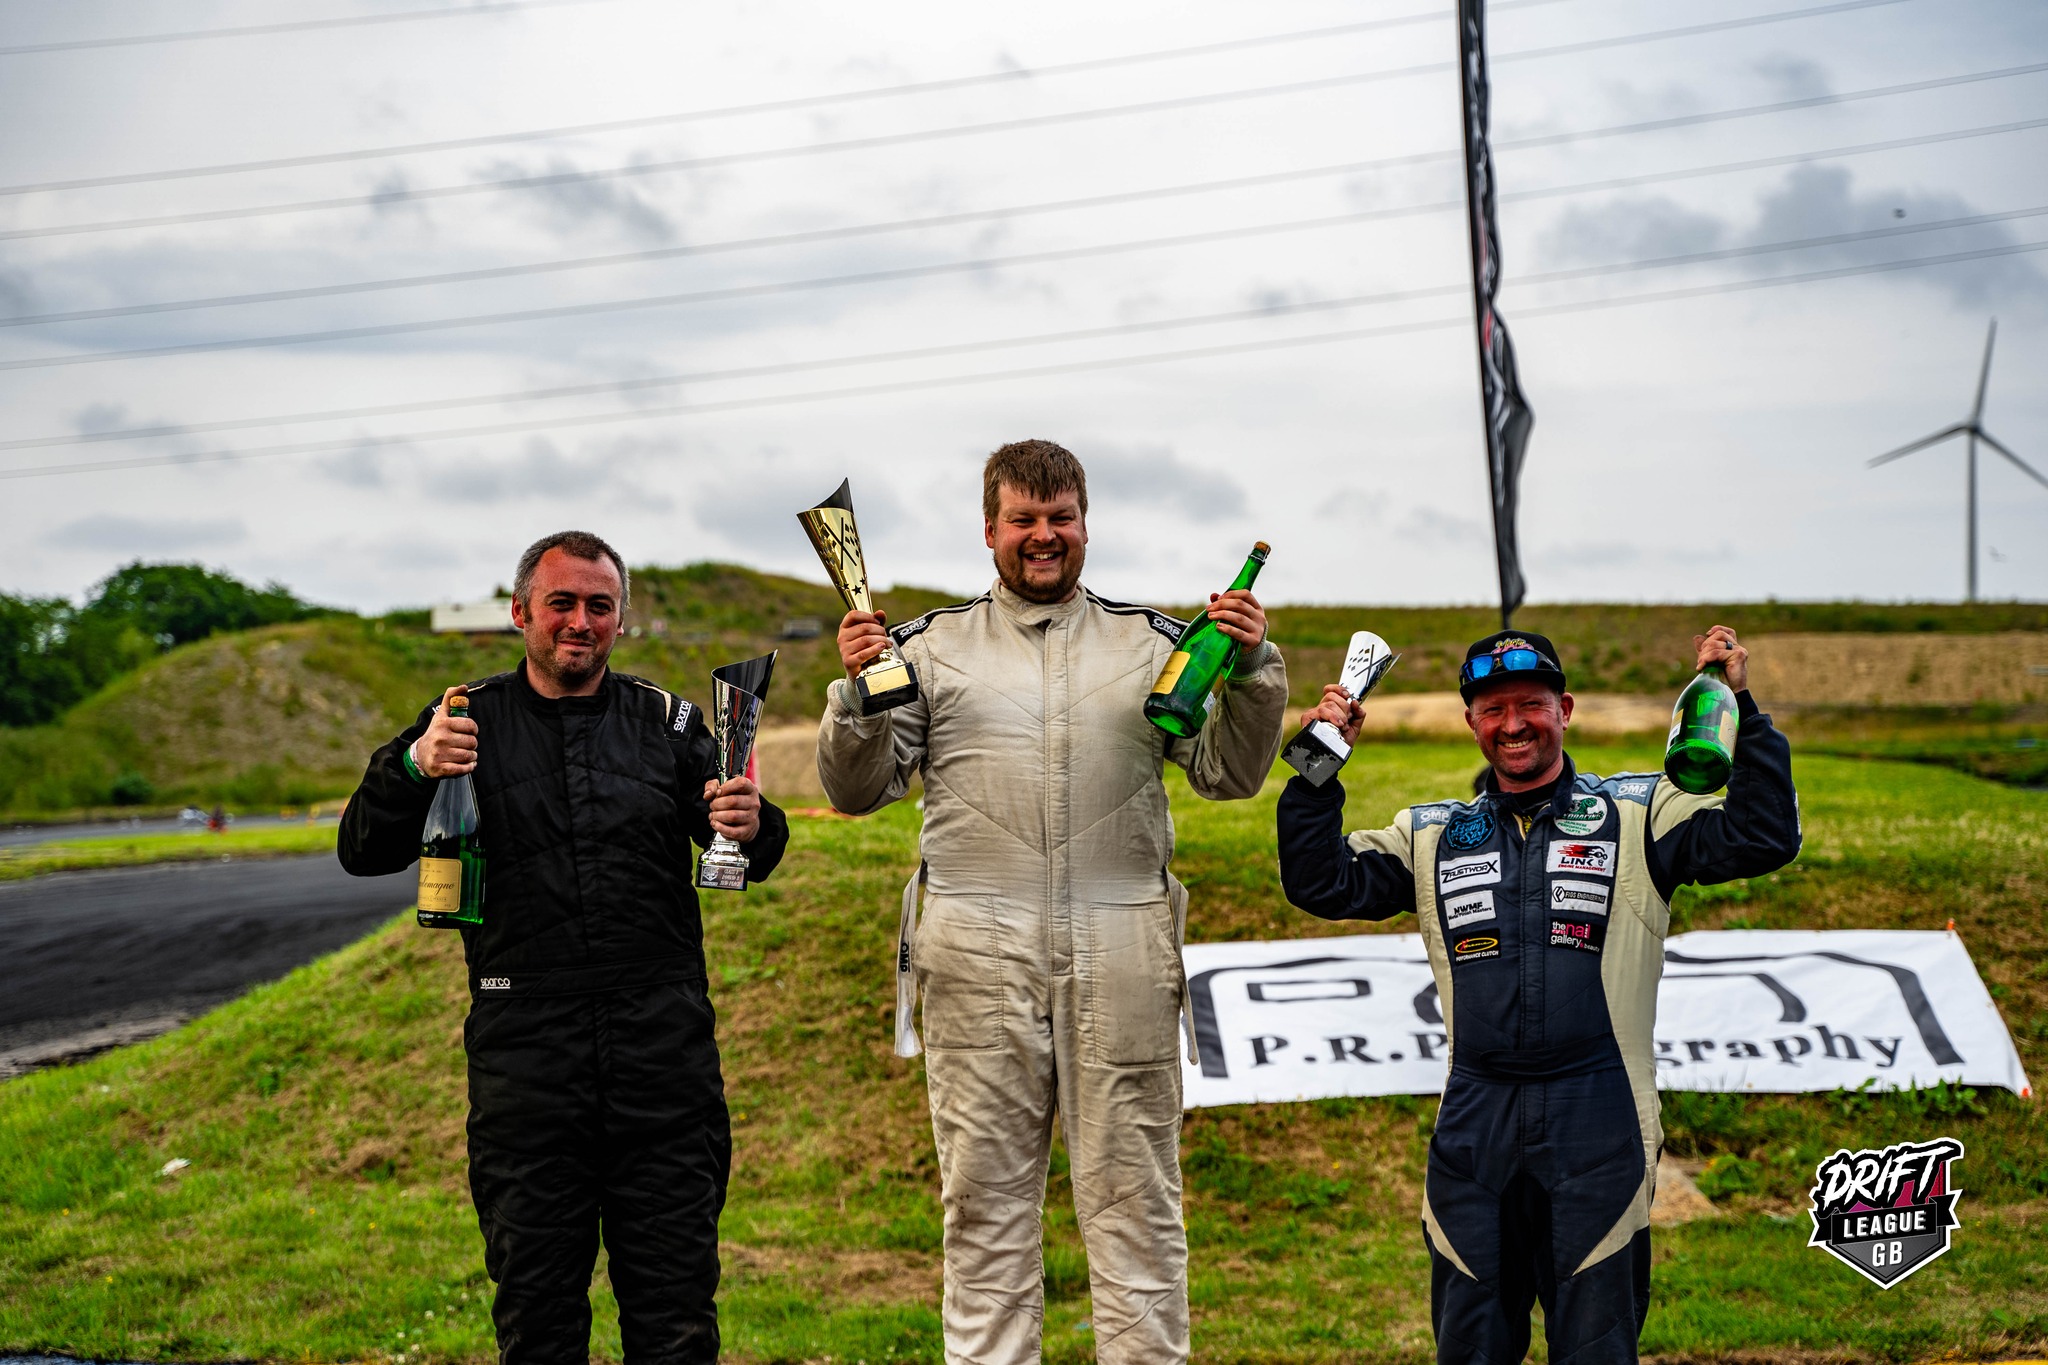 Driftland C1 podium spots went to….